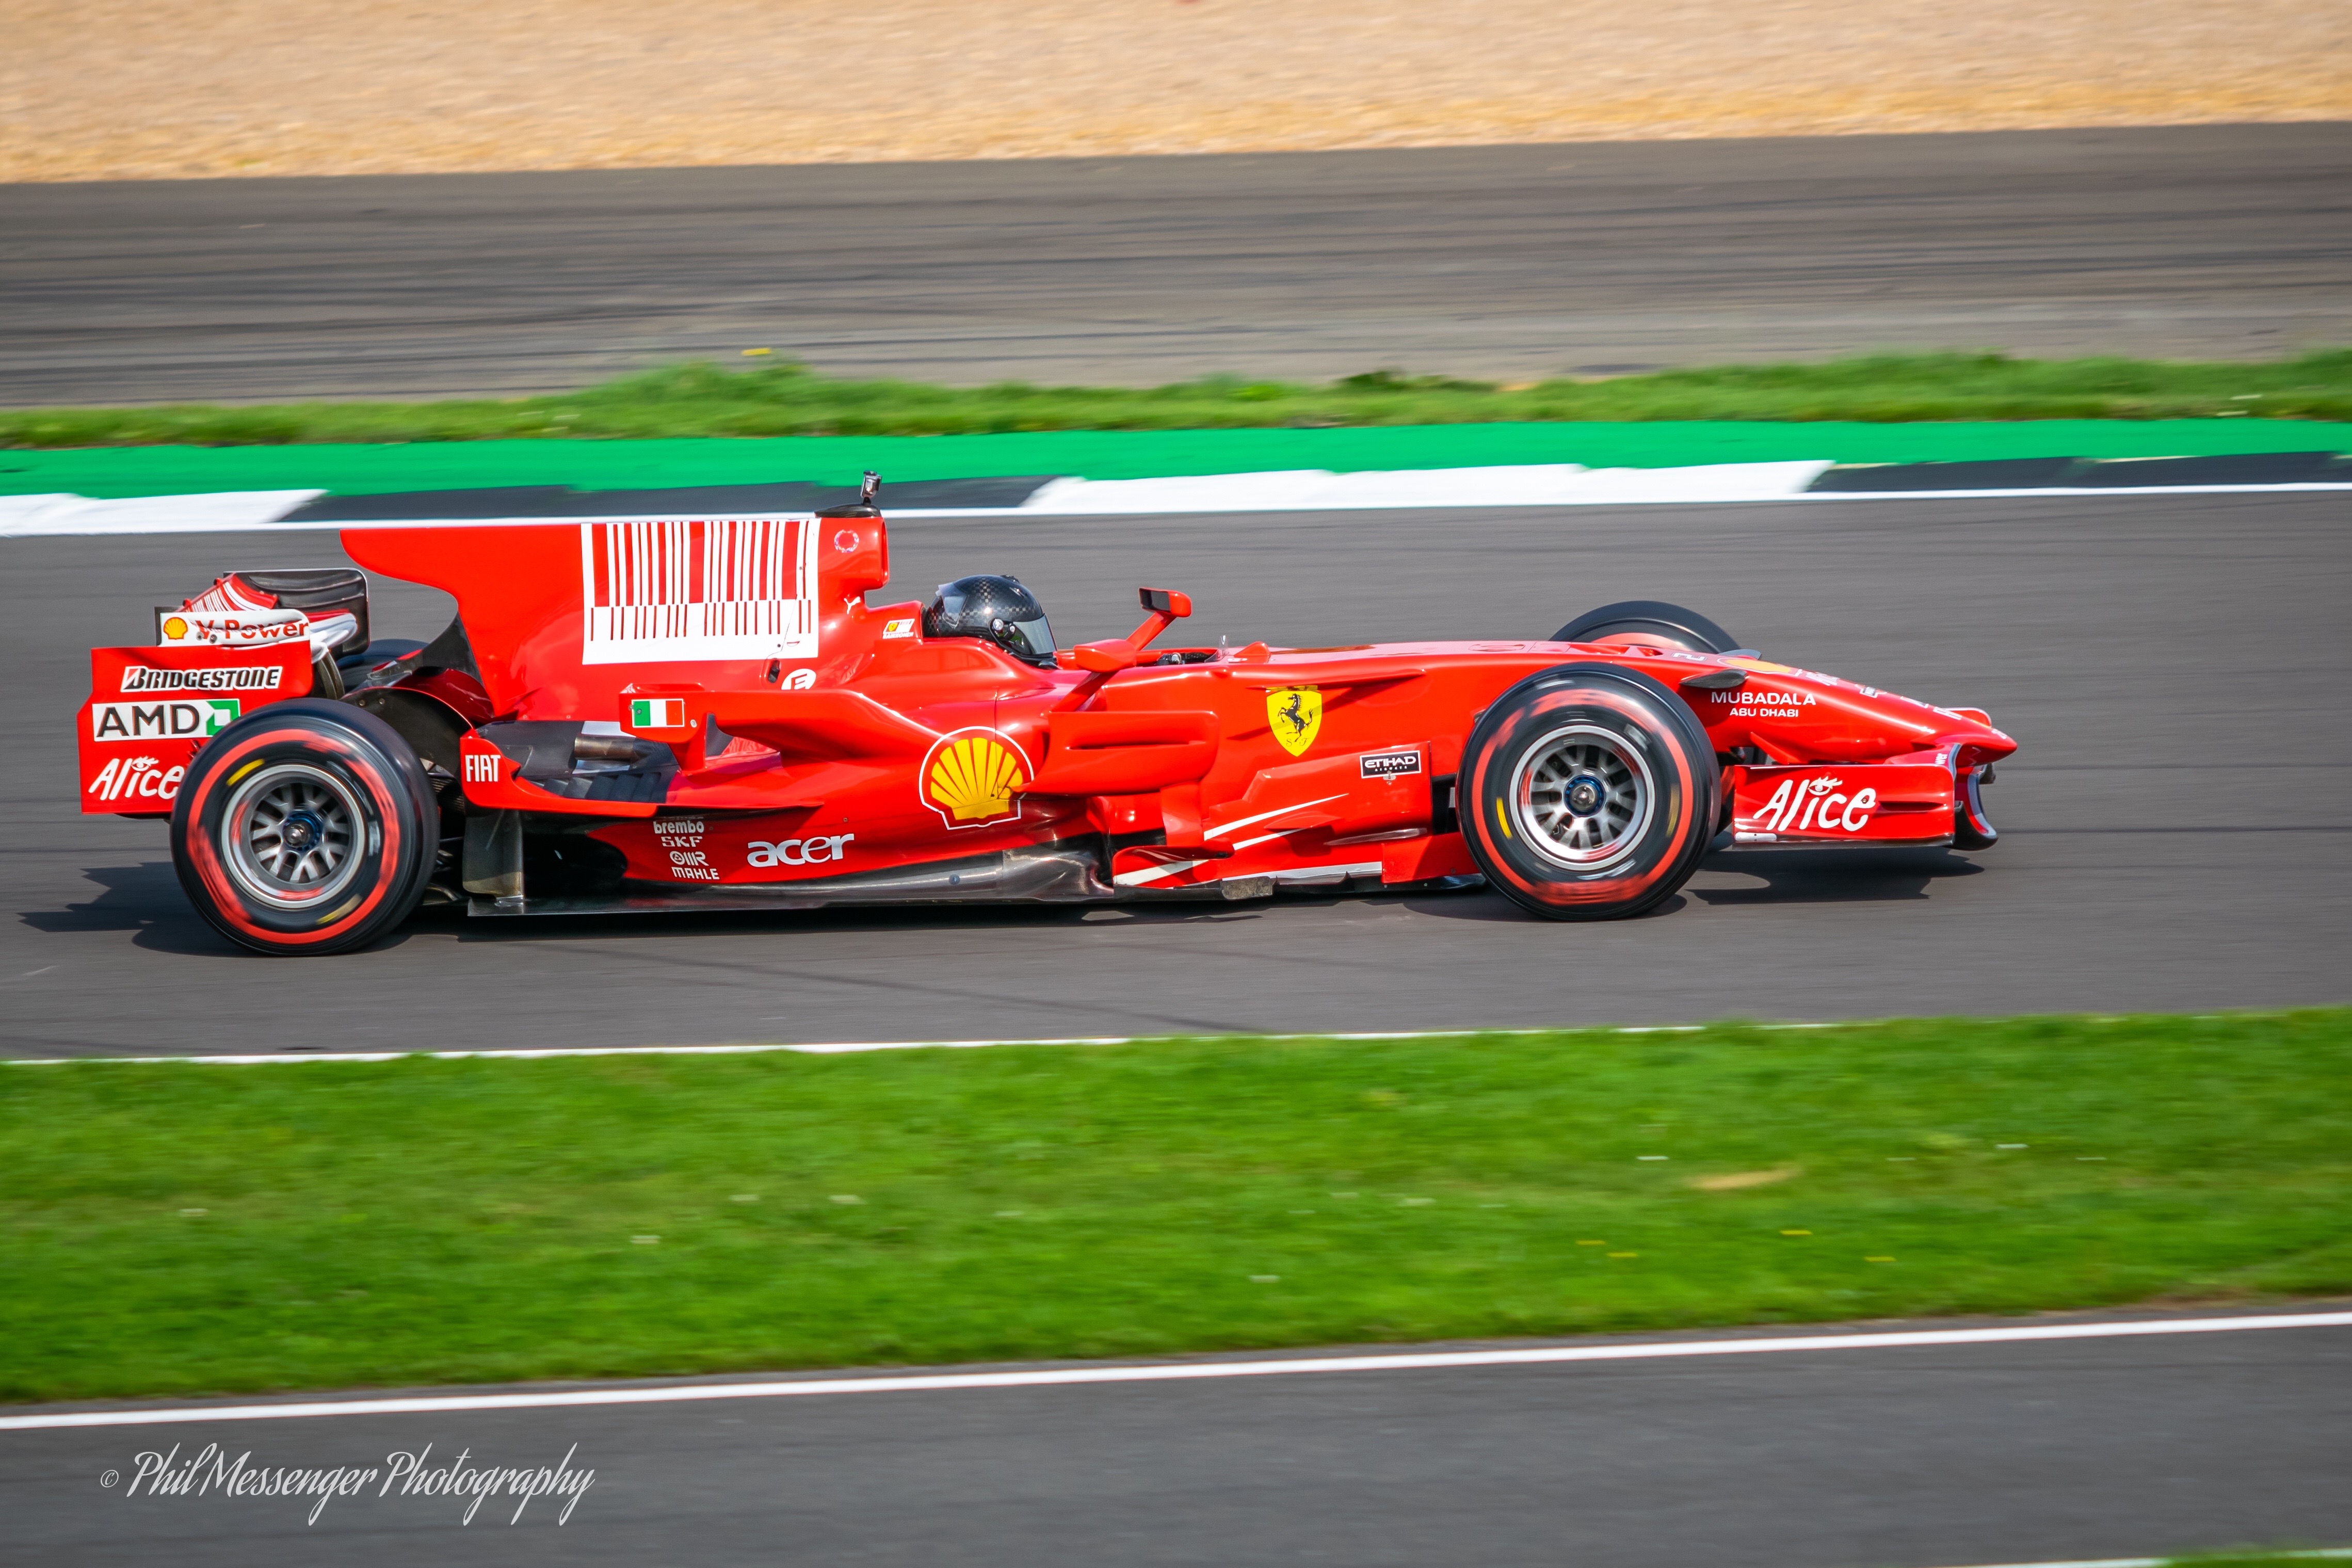 2008 Ferrari formula one racing car